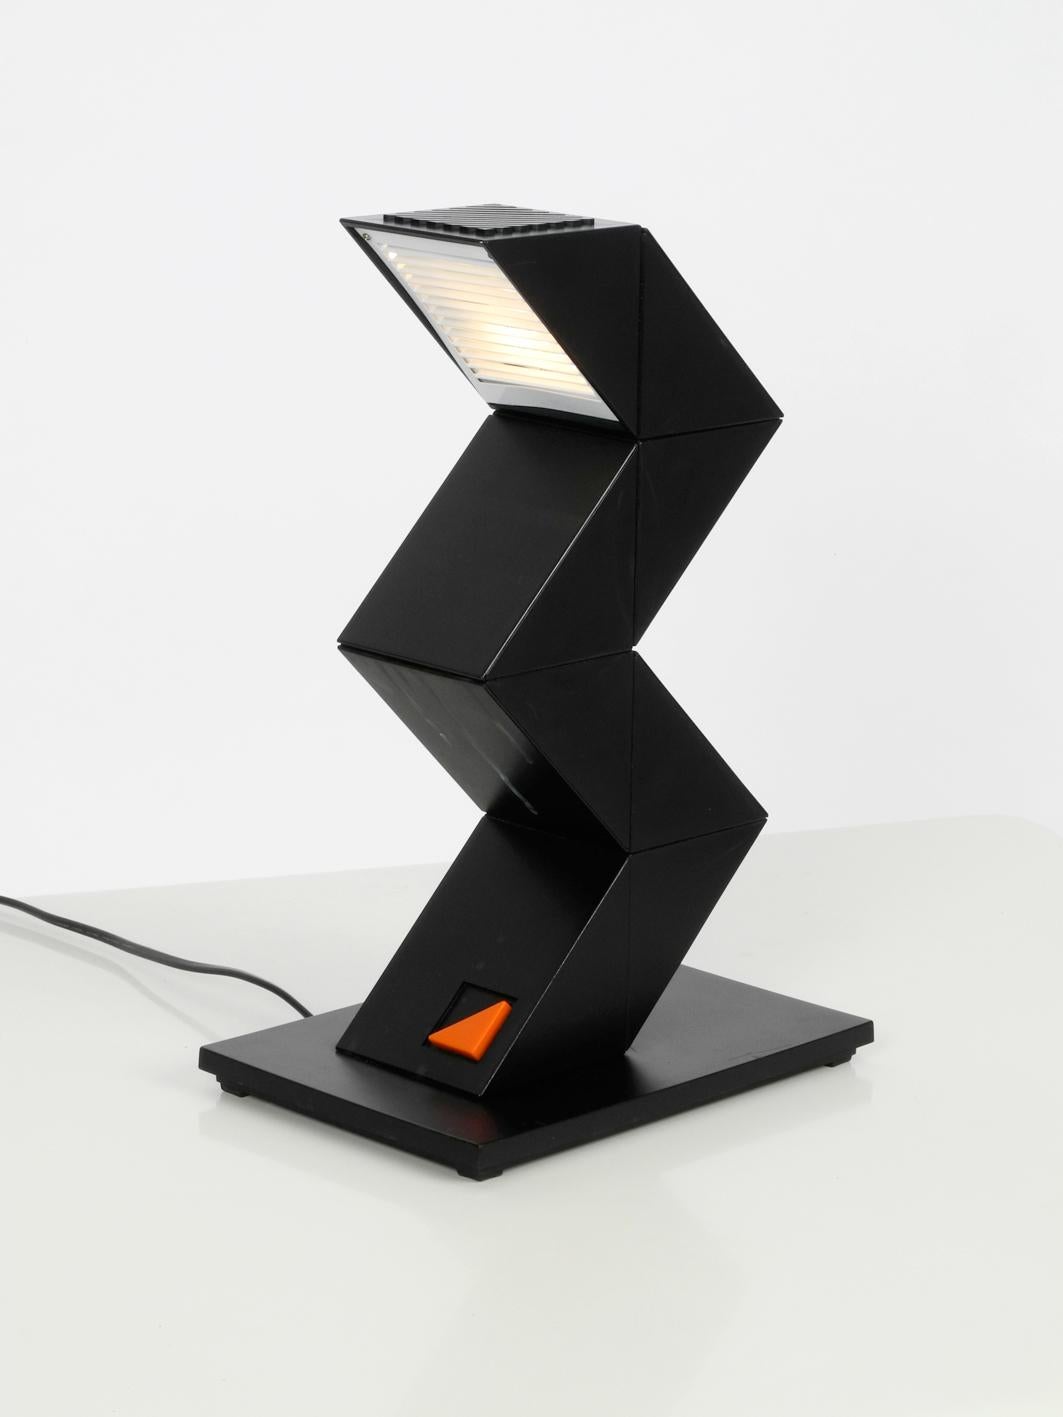 Swiss 1980s Optelma Sculpture Table Lamp Model Z-LITE Design of Switzerland